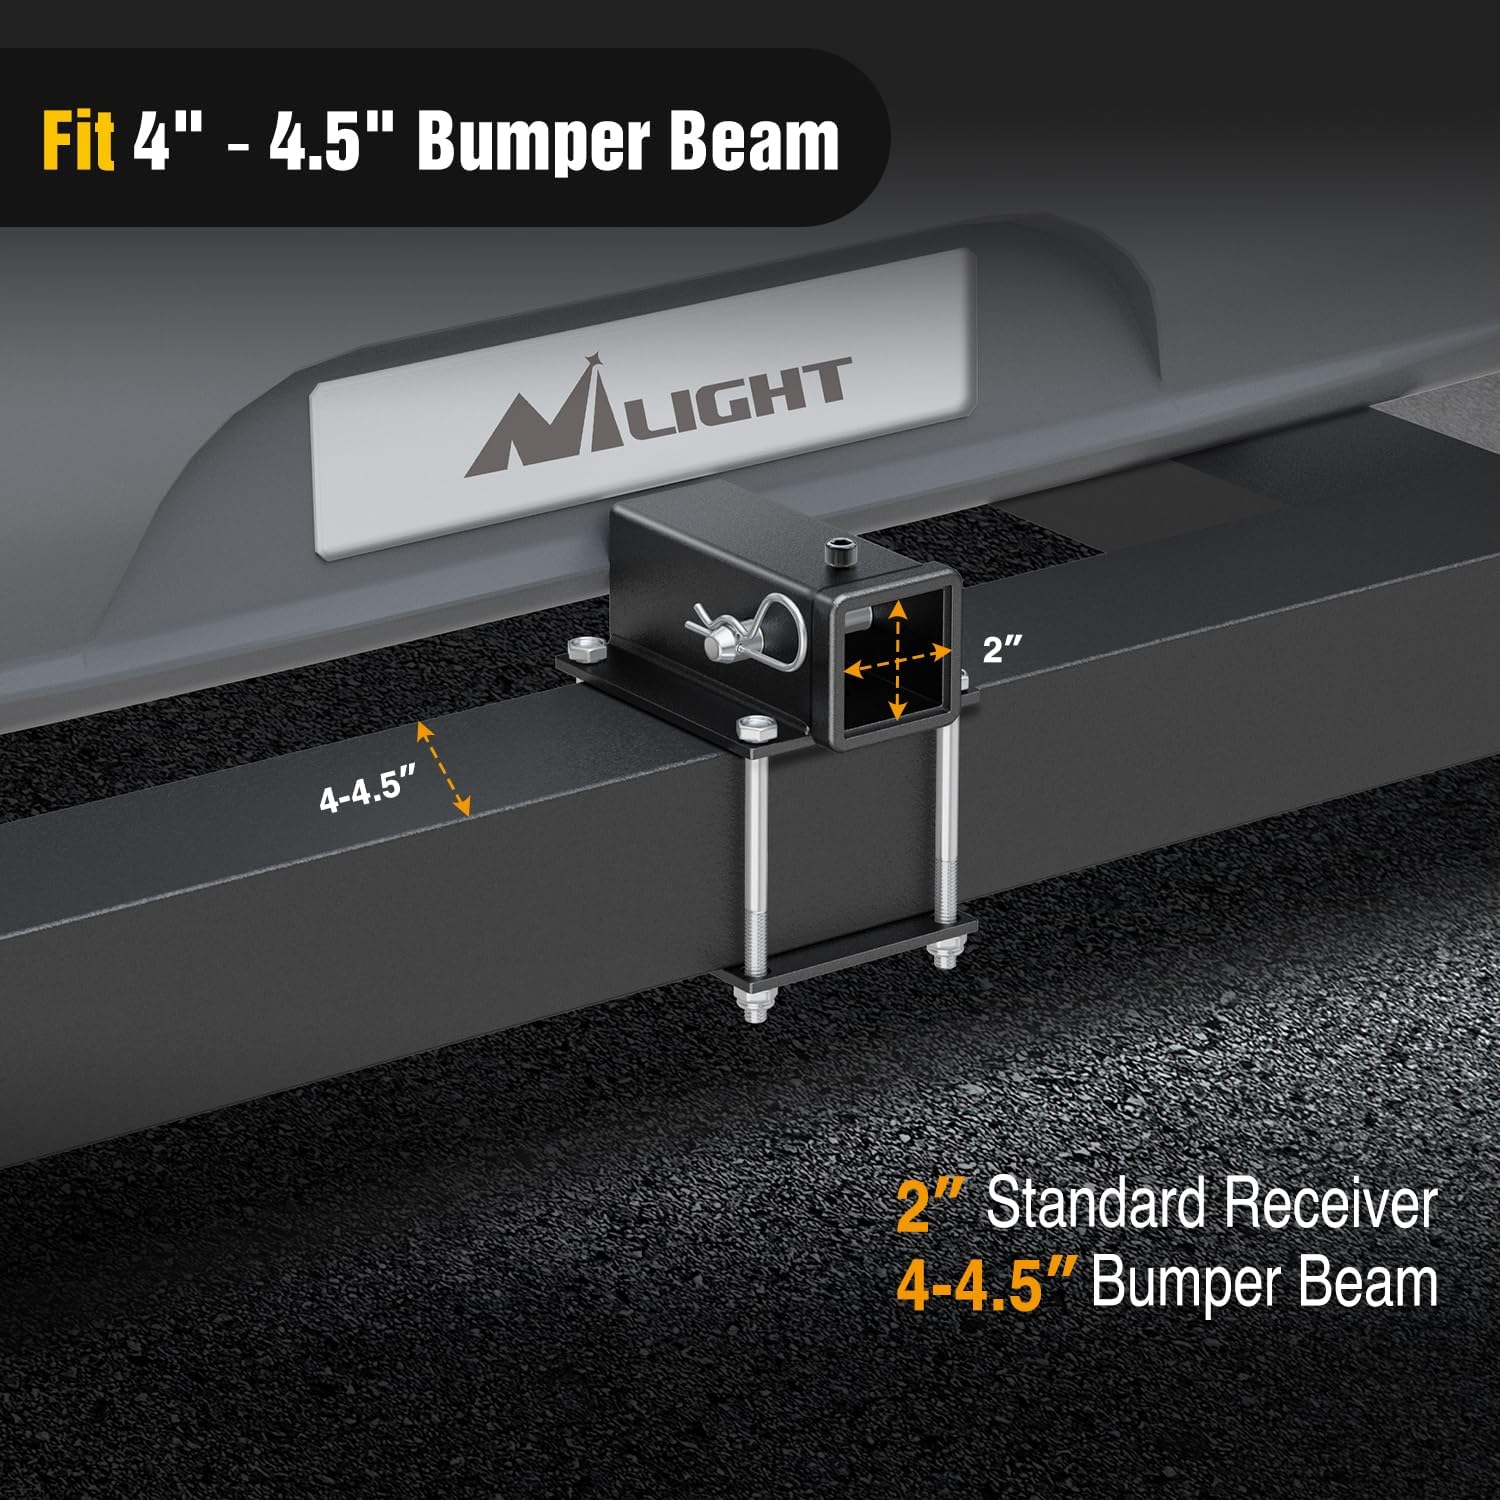 RV Bumper Hitch Receiver Fits 4-4.5 inches Bumper Beams Nilight